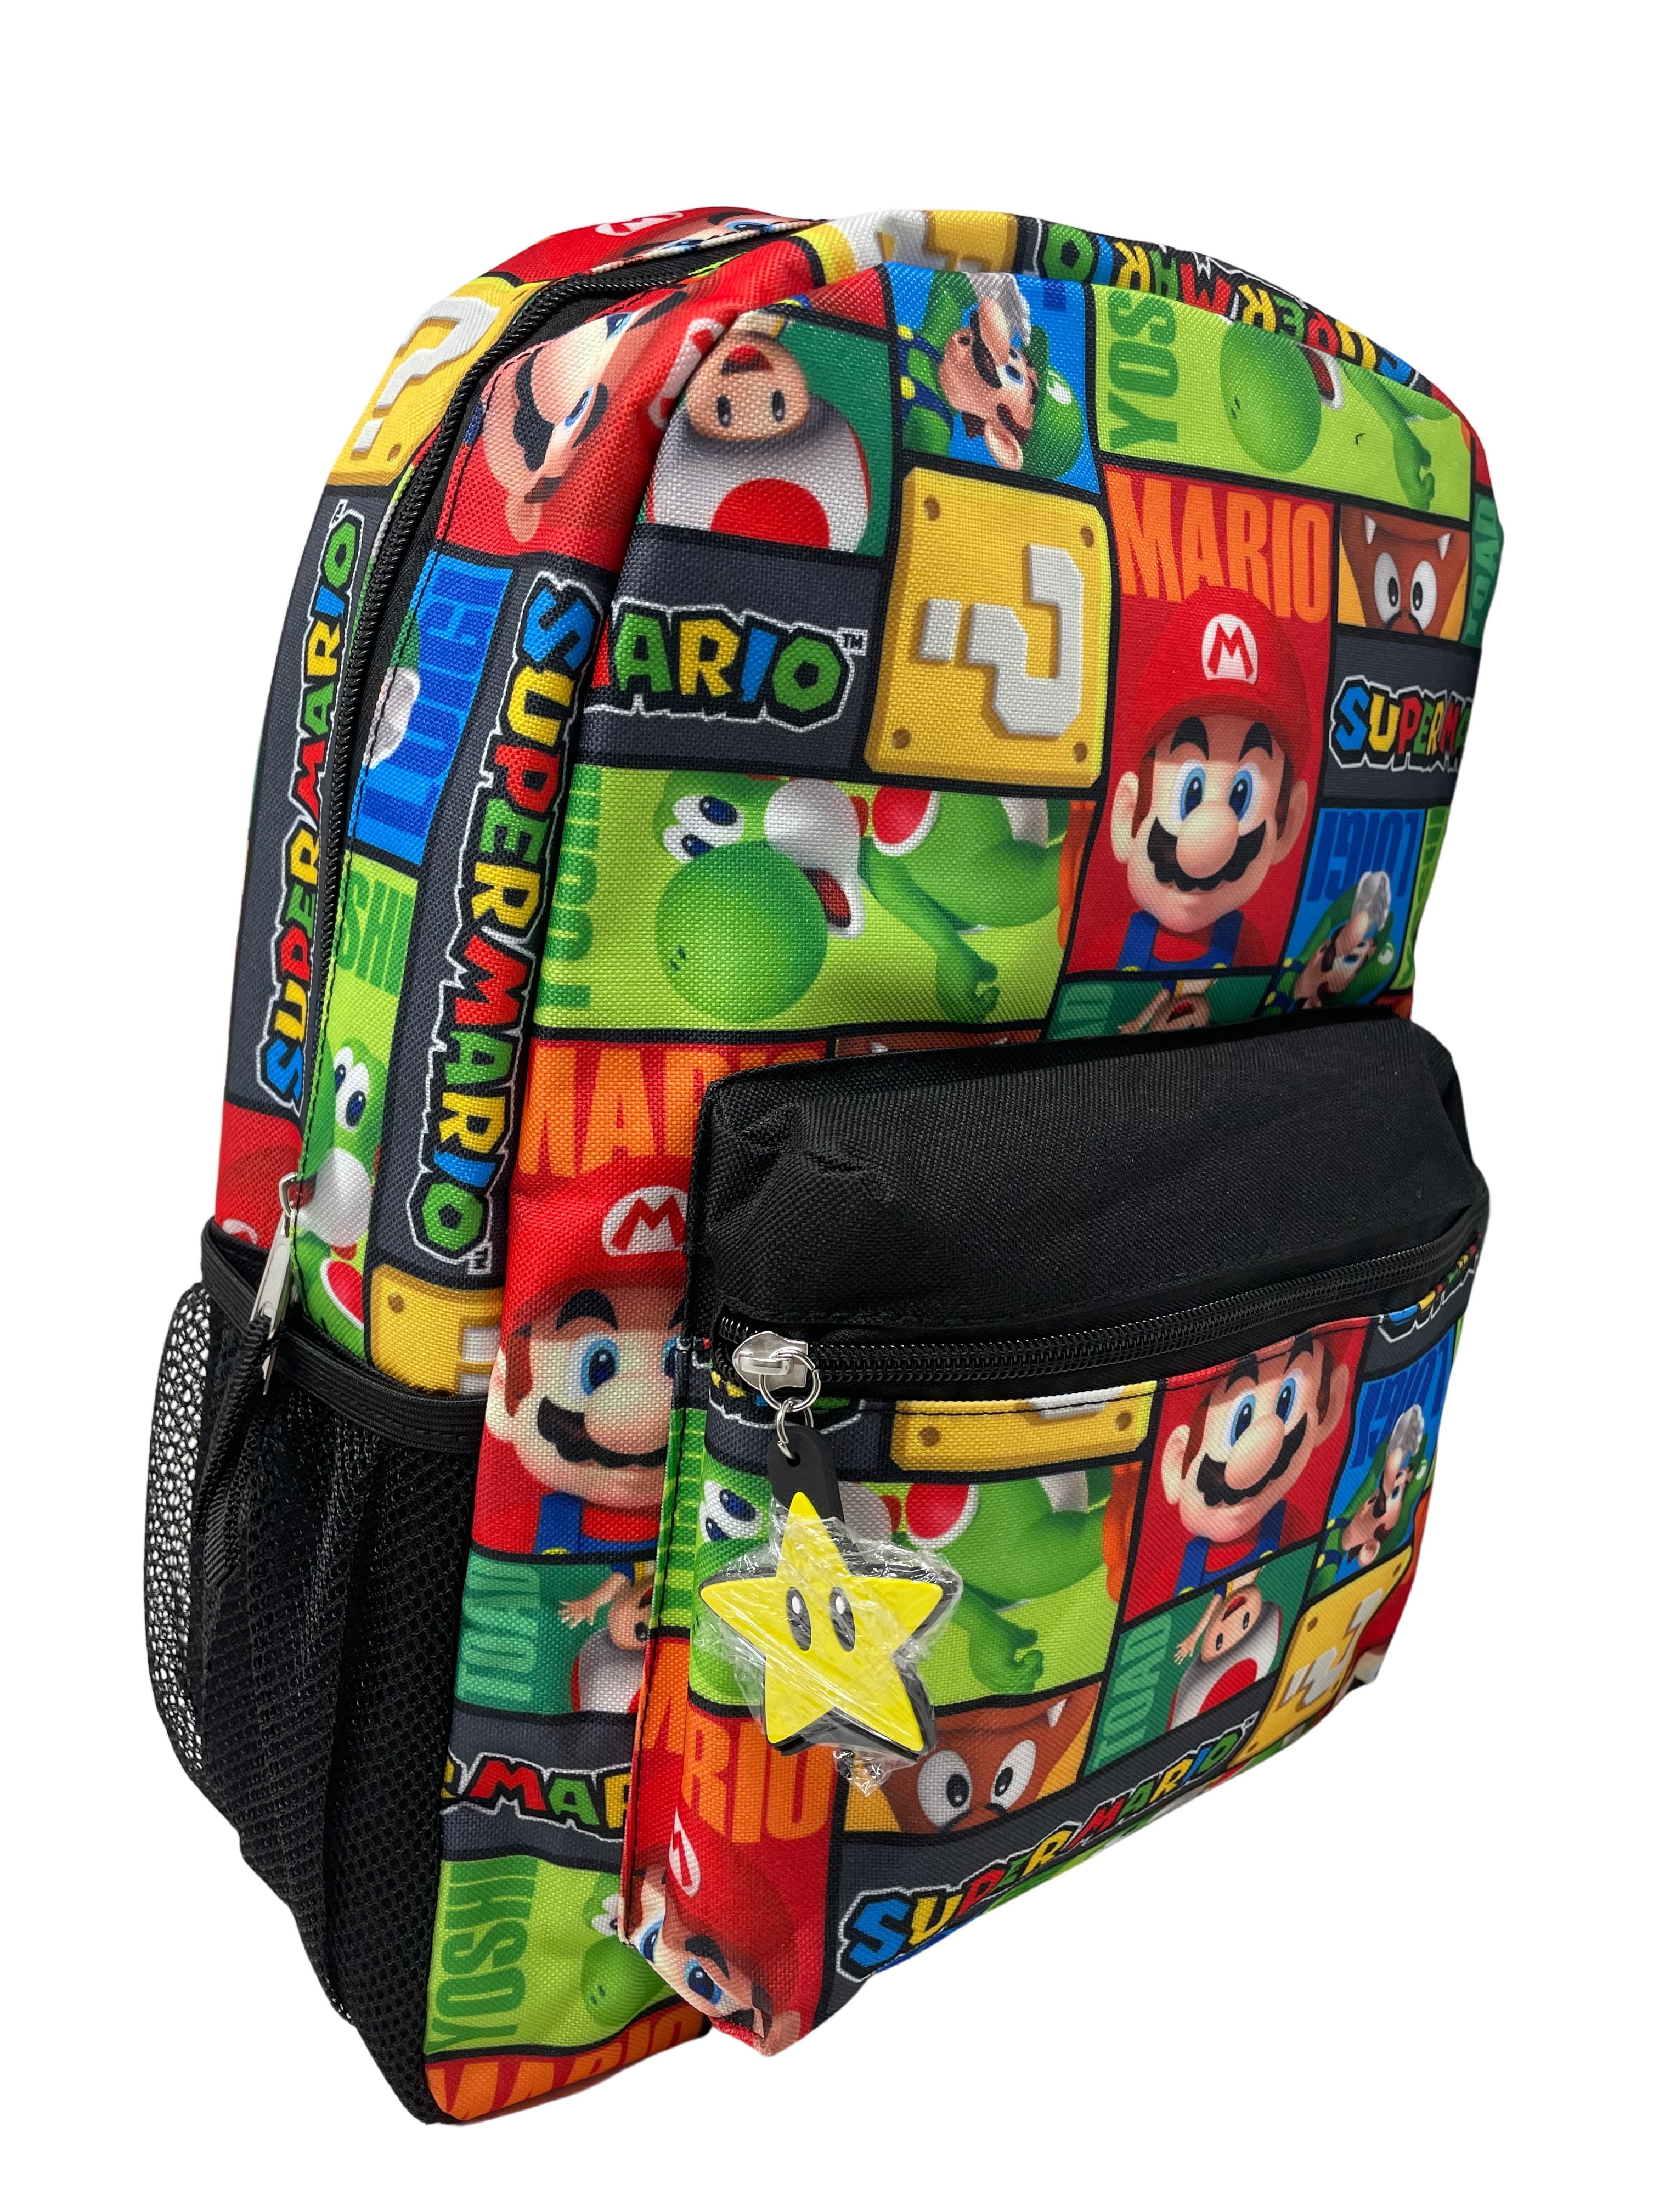 Print 16" Backpack/ School Book Bag NWT! Super Mario Bros Laptop Pocket COOL 